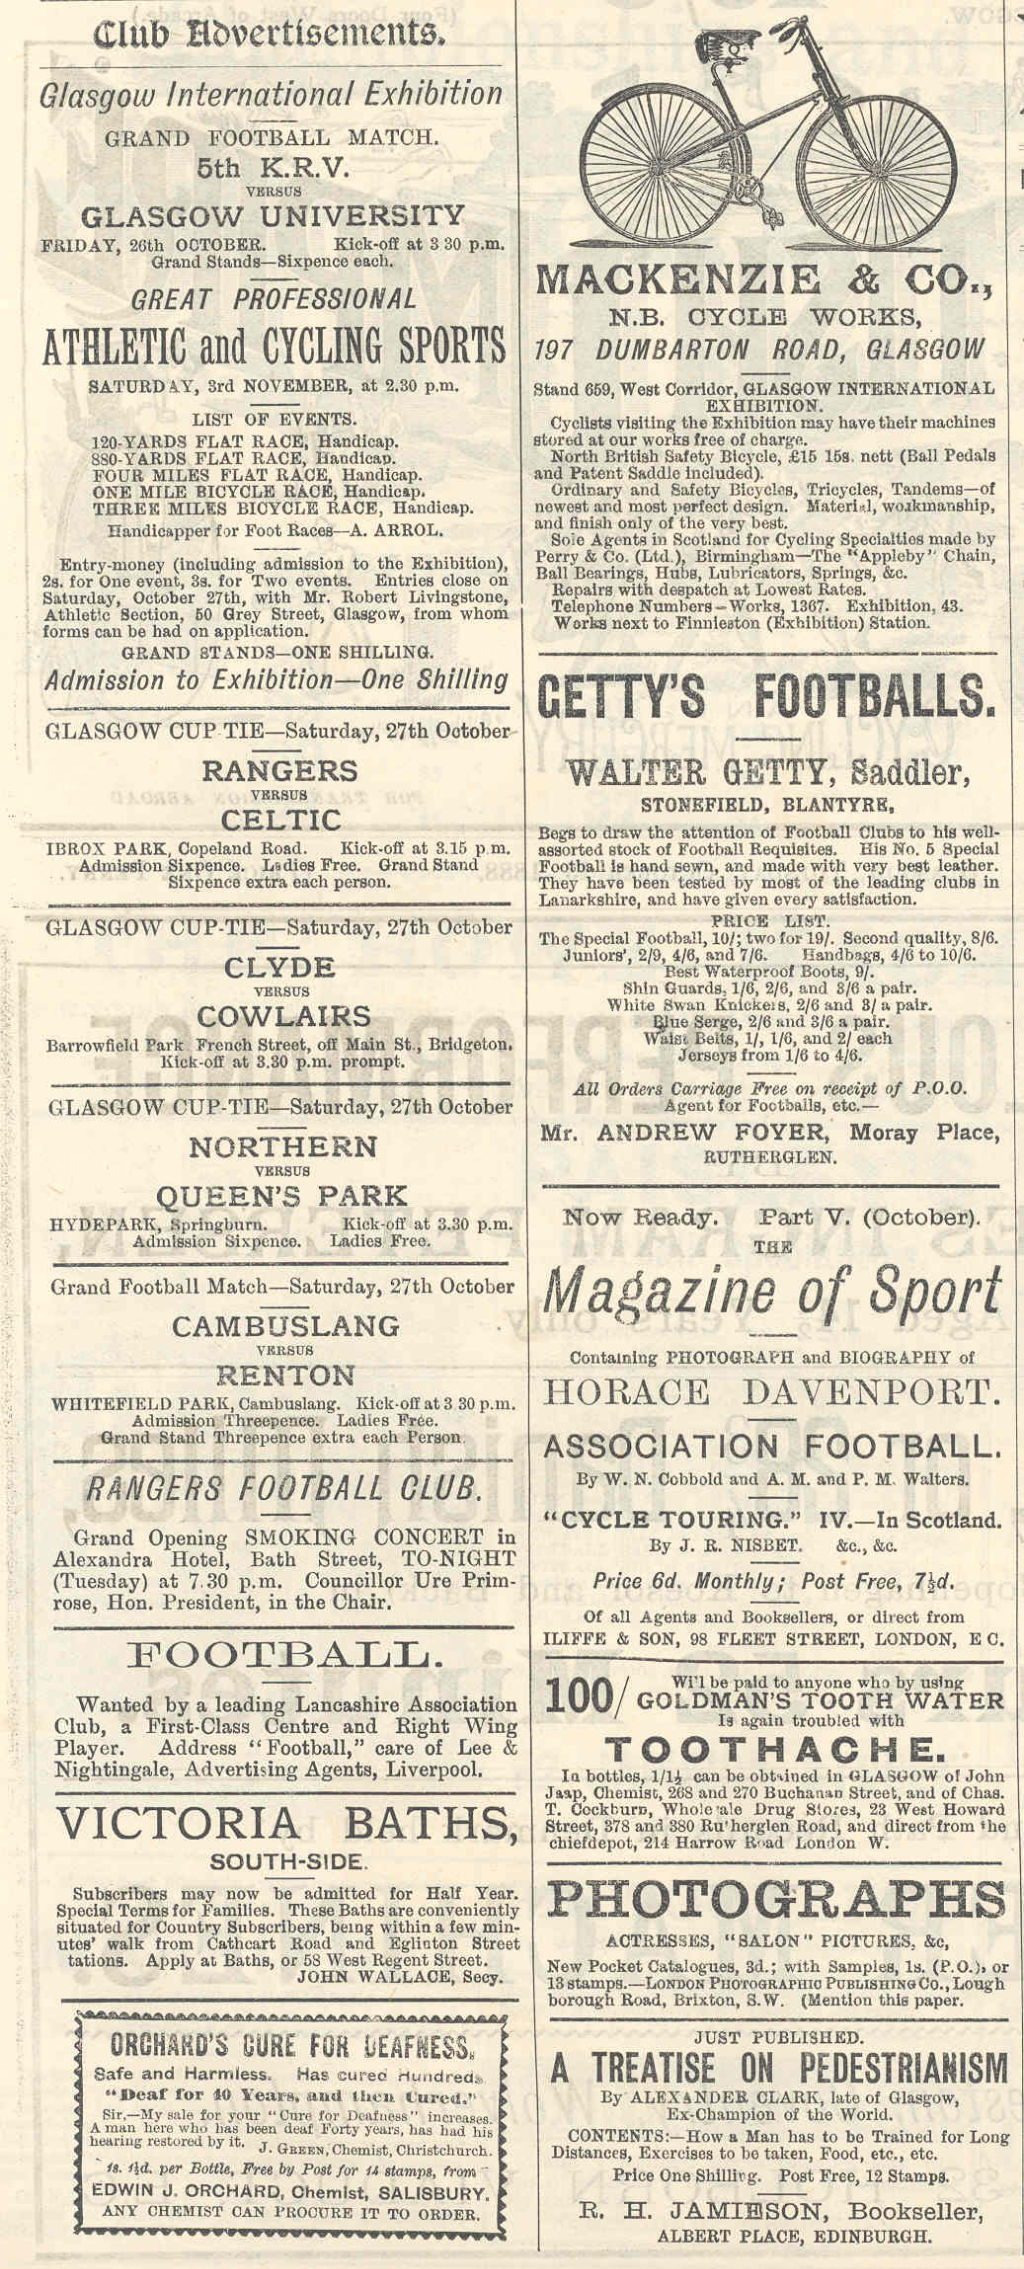 Club adverts in the Scottish press, 1888